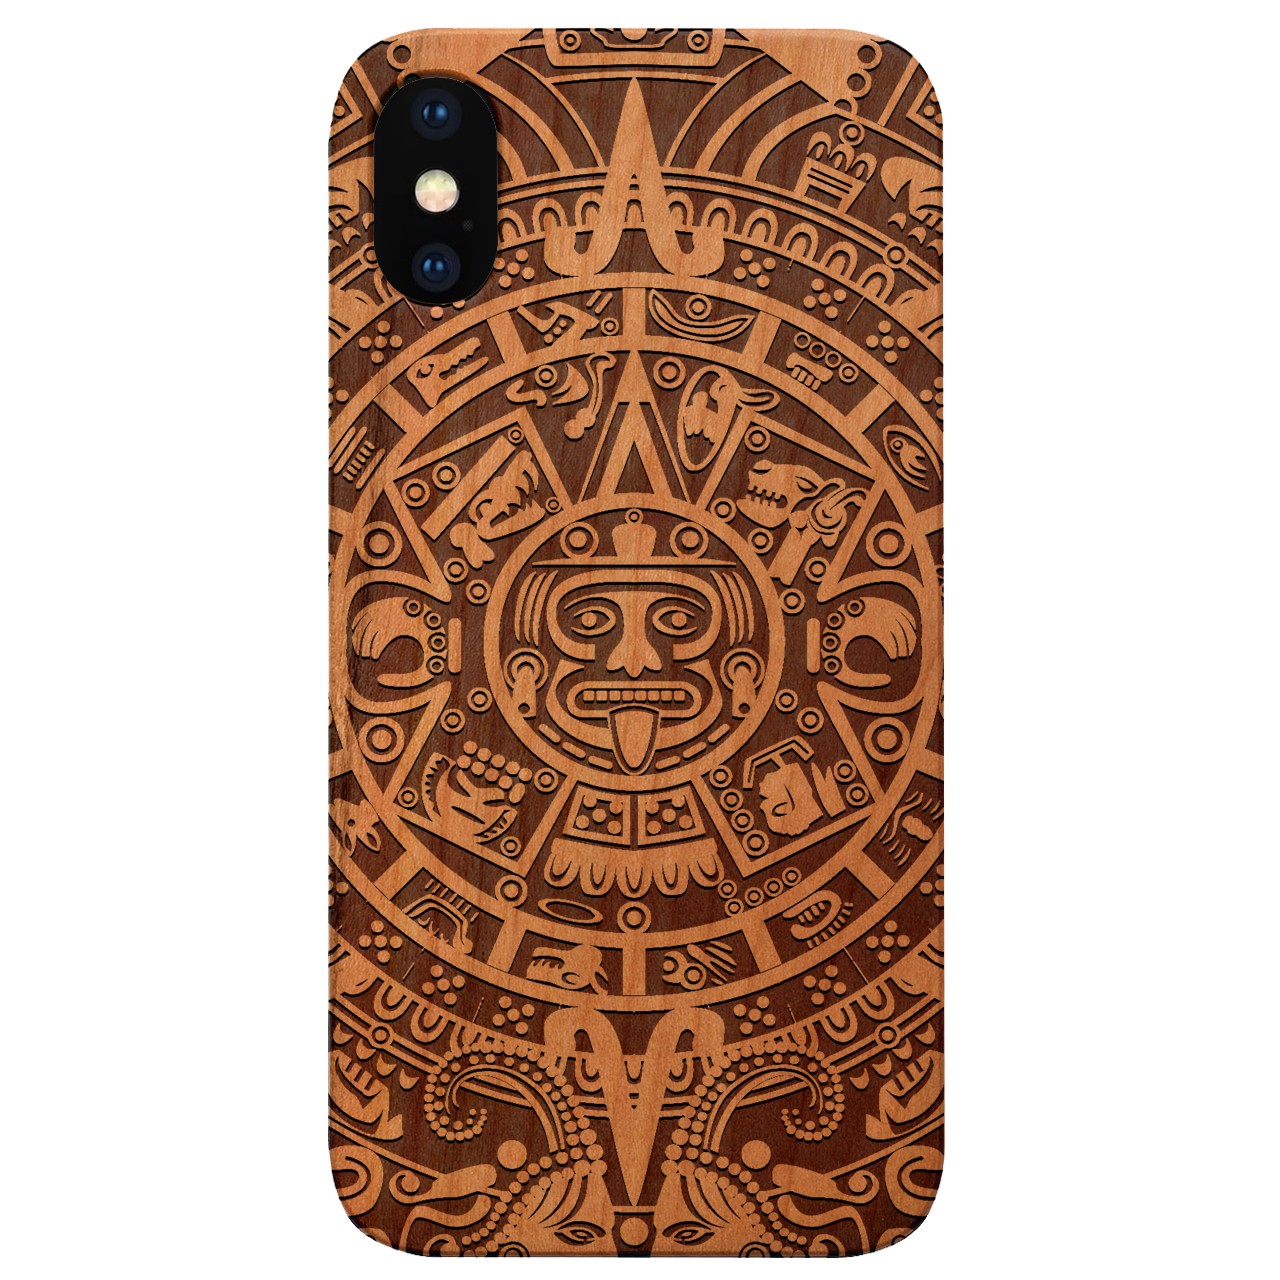  Mayan Calendar 1 - Engraved - Wooden Phone Case - IPhone 13 Models